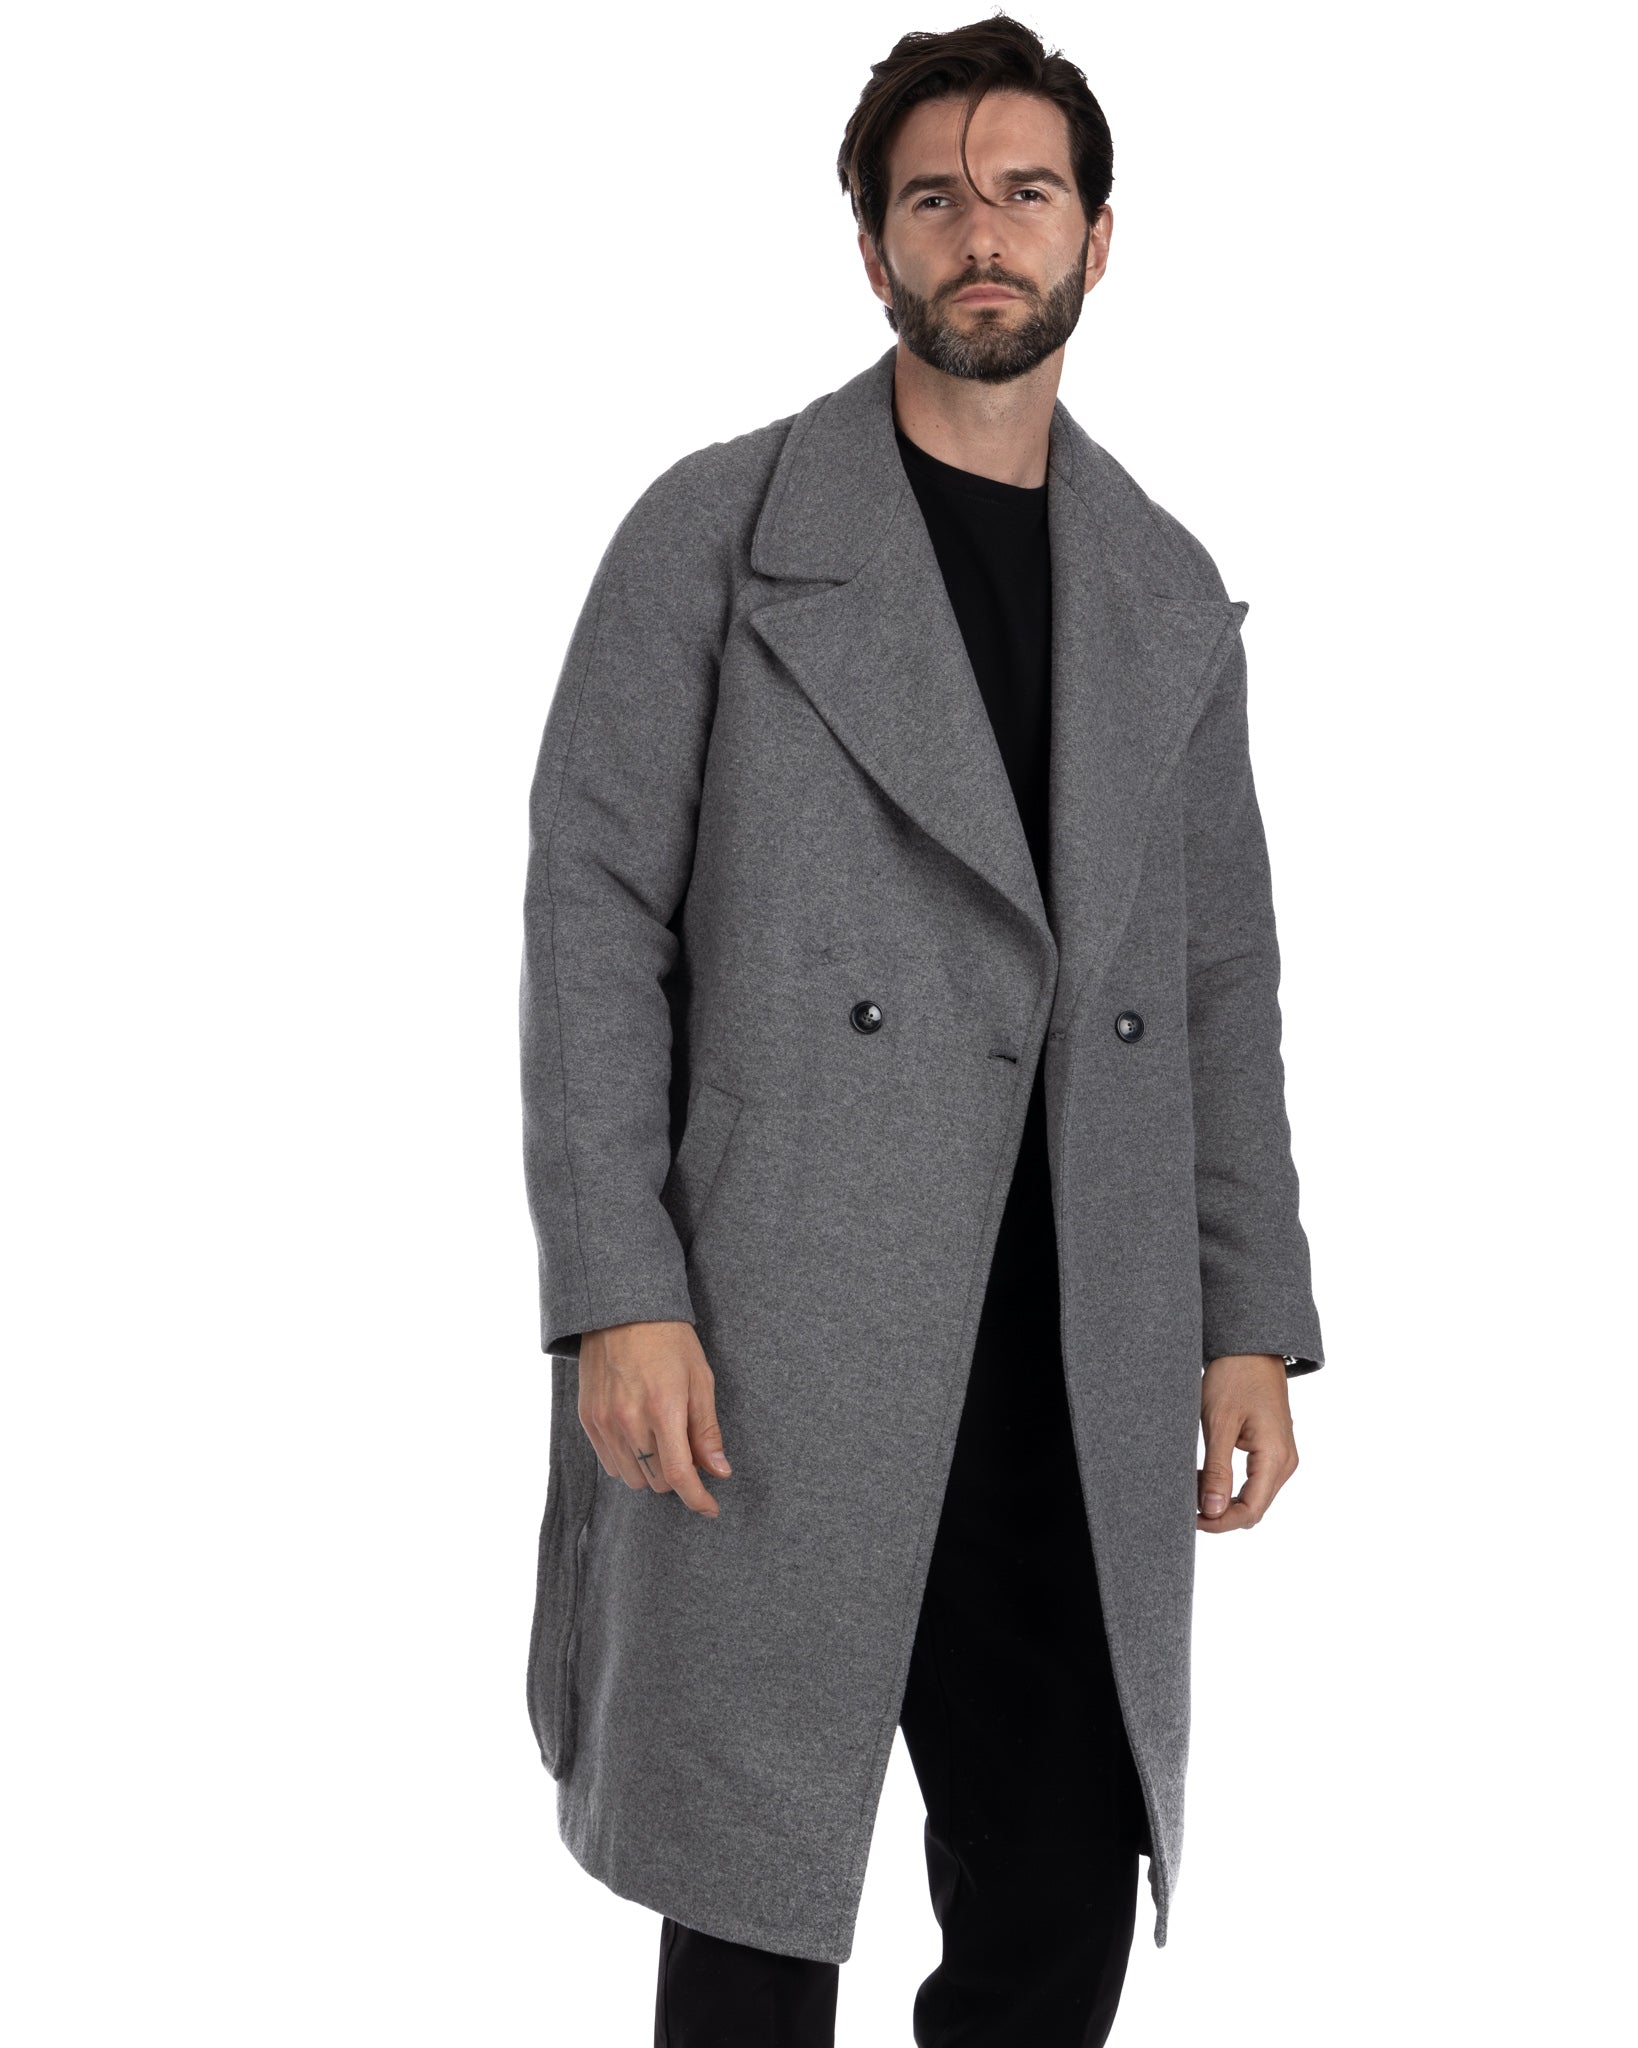 Claude - manteau peignoir gris clair